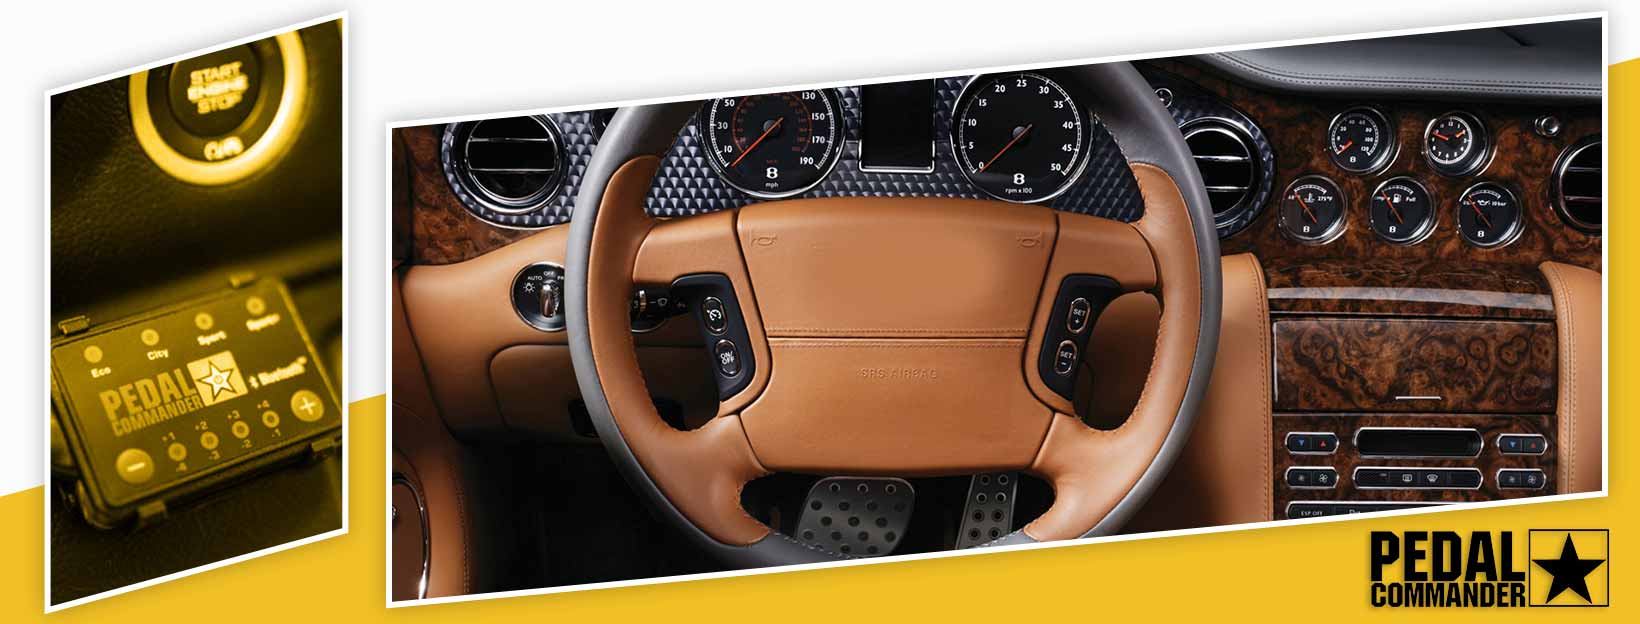 Pedal Commander for Bentley Azure - interior